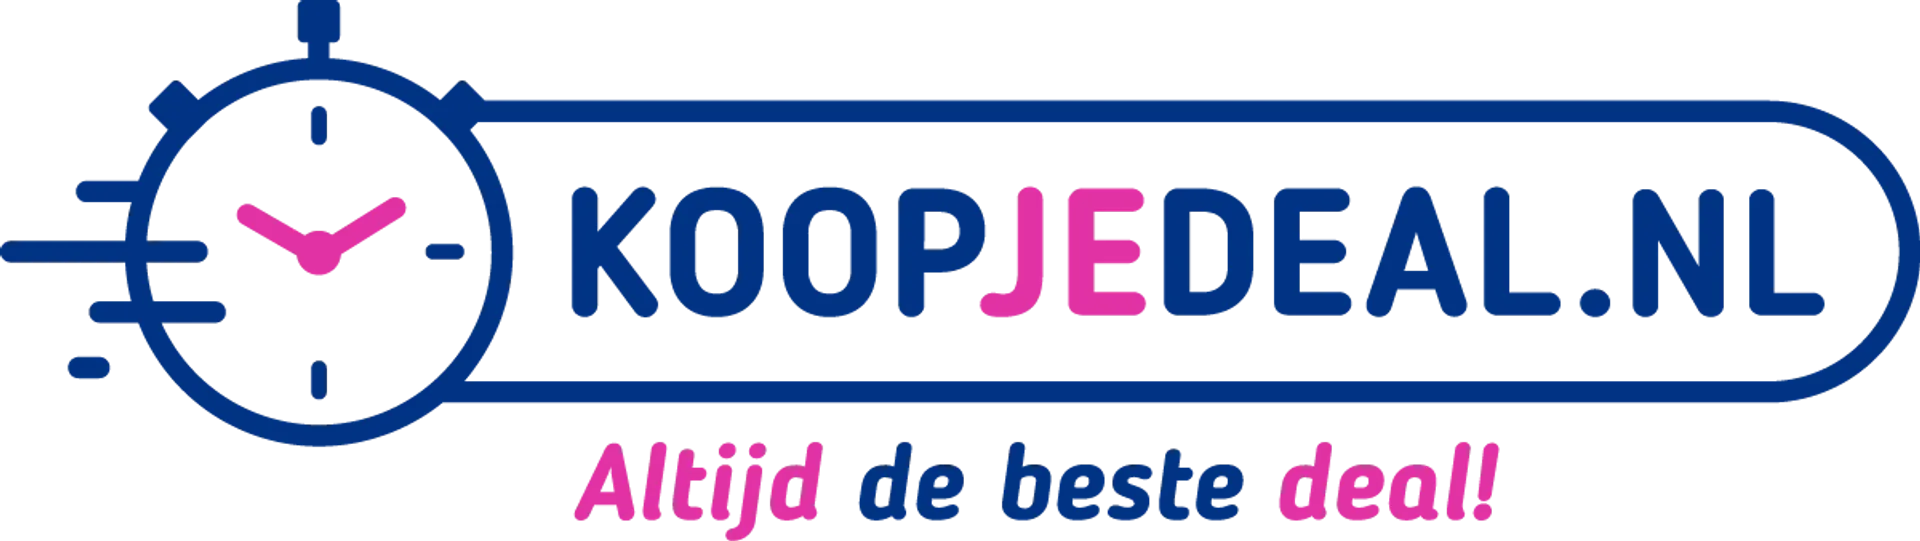 KOOPJEDEAL logo